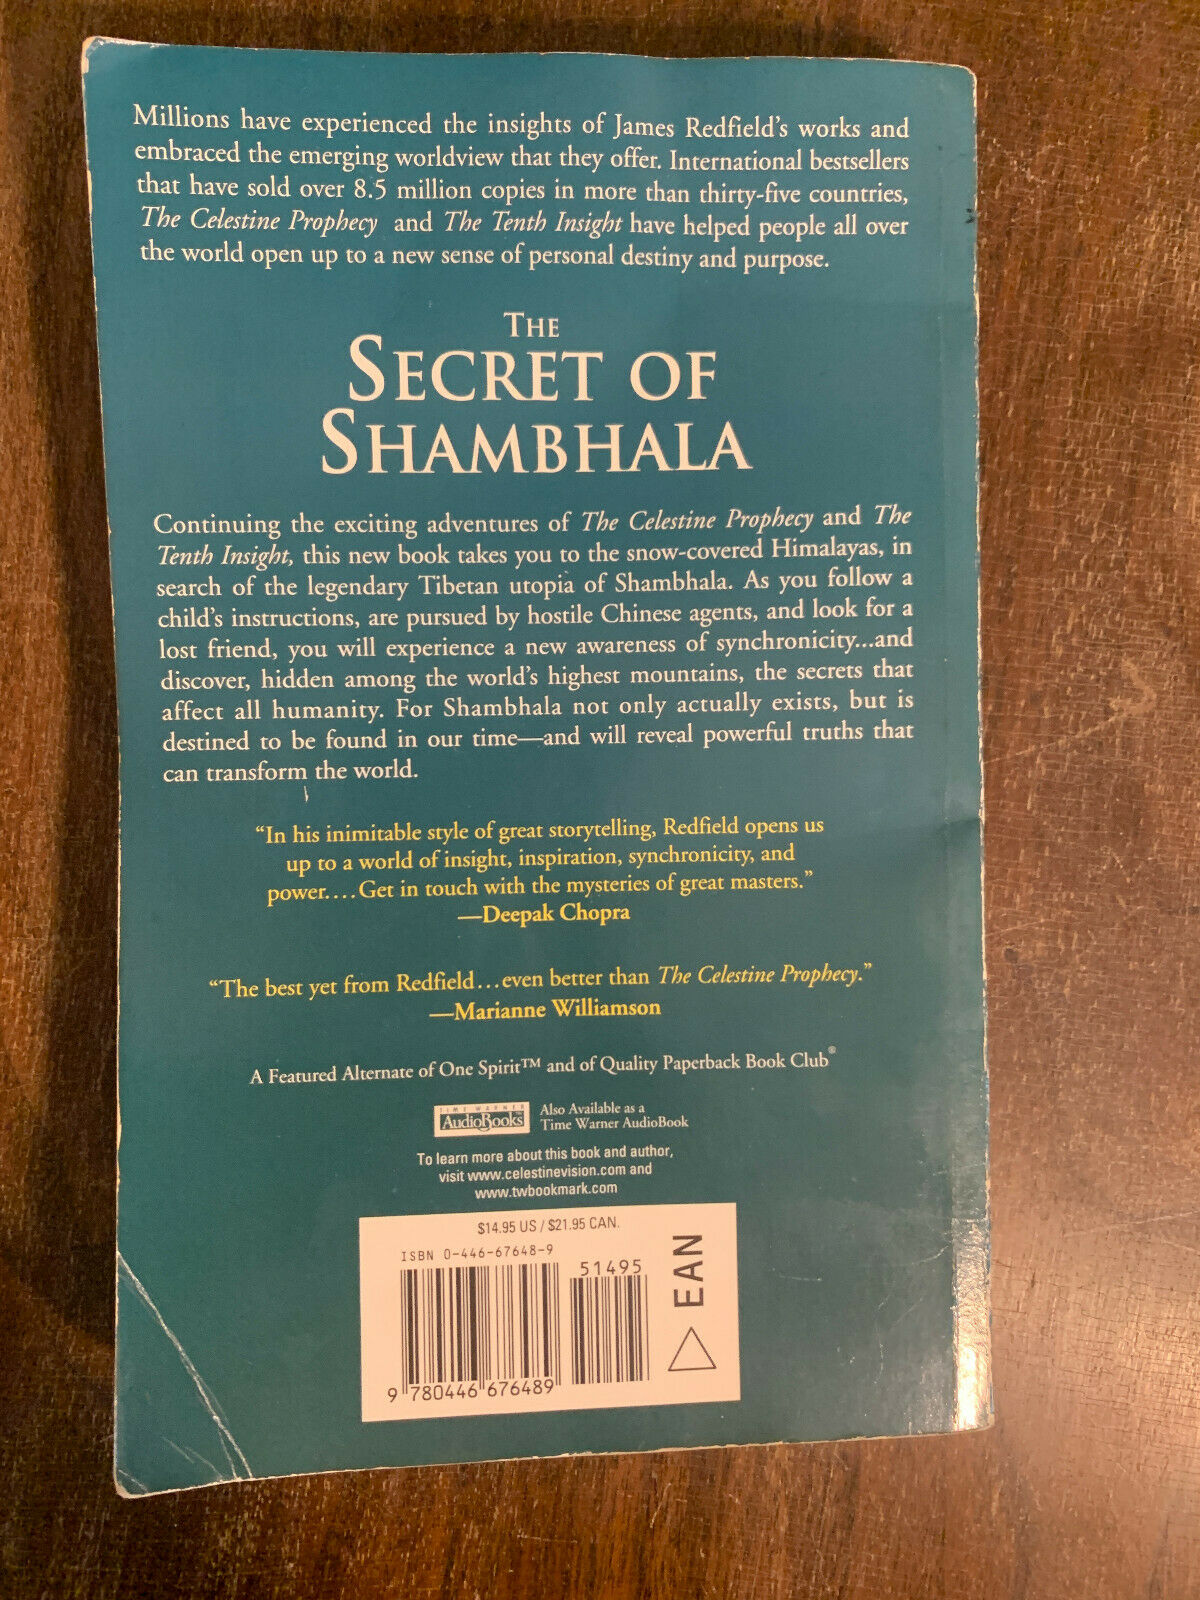 The Secret of Shambhala by James Redfield, Trade Paperback (HS9)